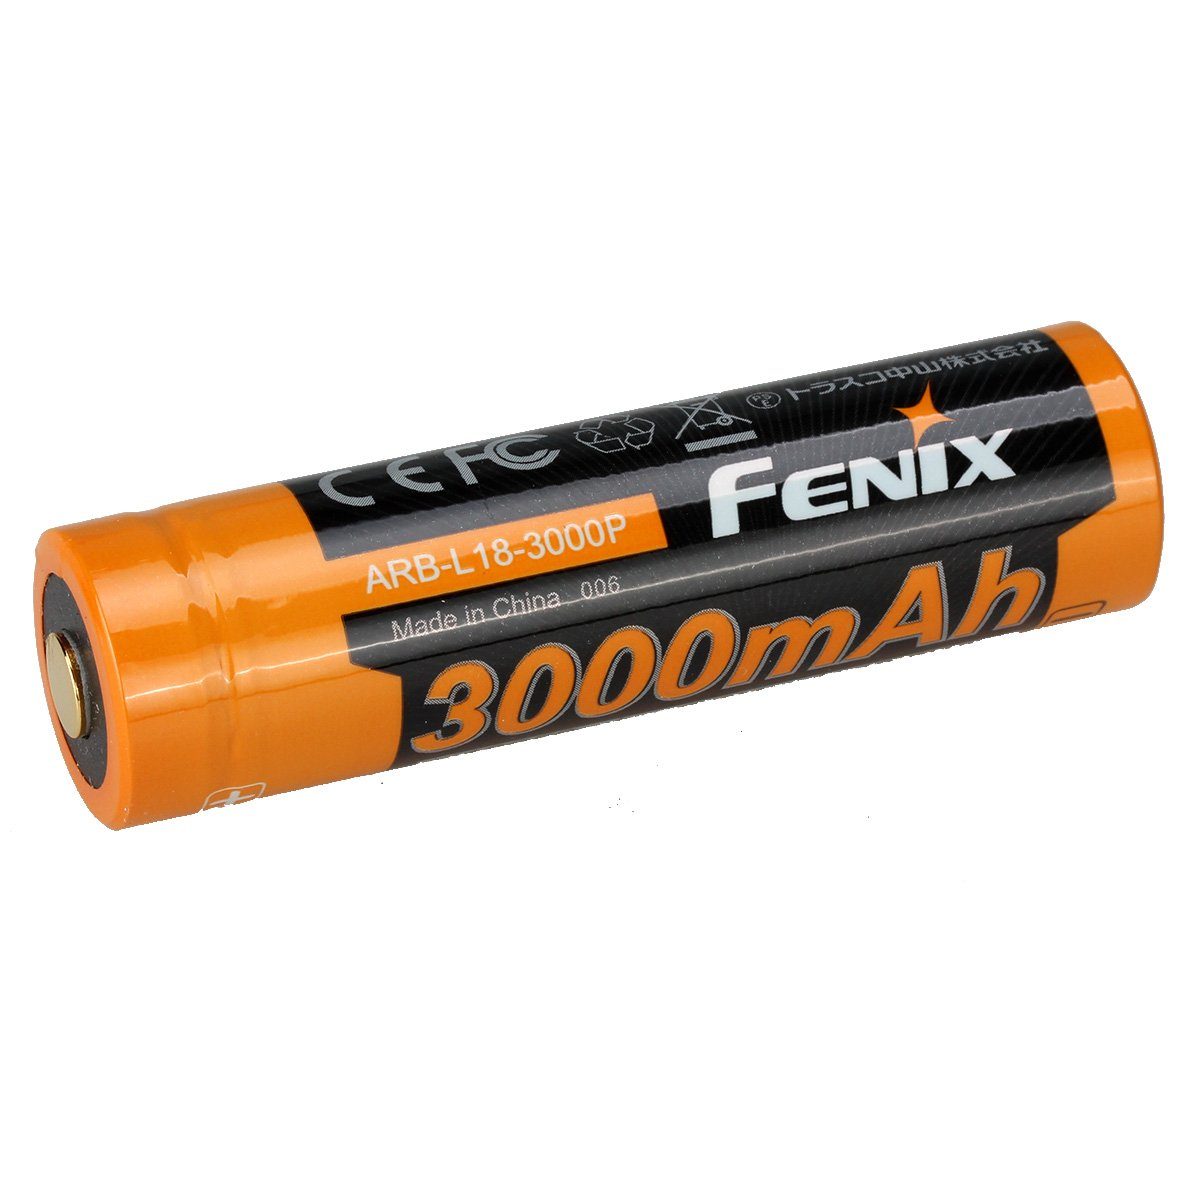 Fenix ARB-L18-3000P 18650 Li-Ion Akku 3,6V 3000mAh Akku | Akkus und PowerBanks